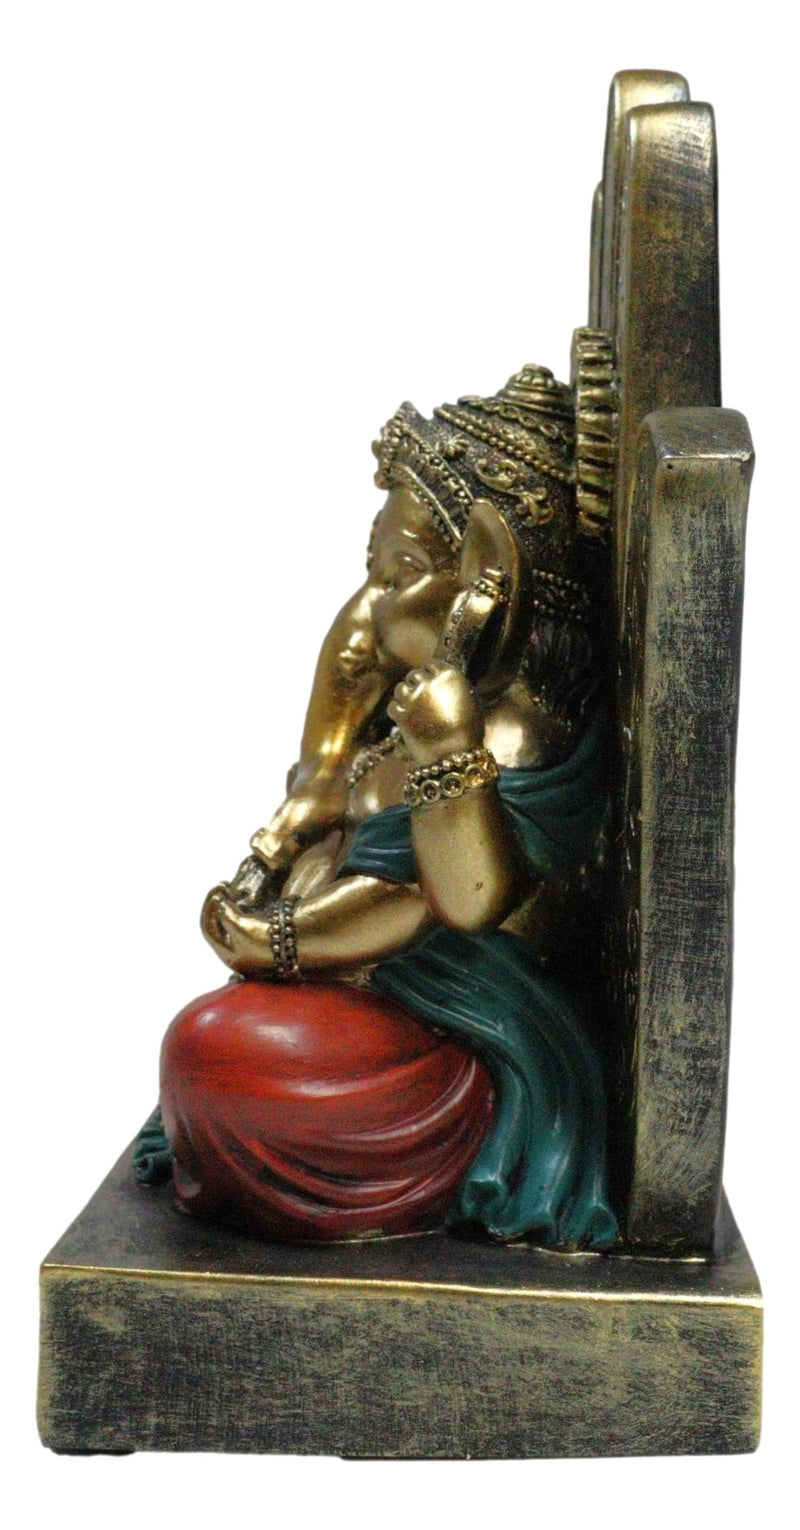 Hindu Elephant God Ganesha Seated On Hamsa Palm Hand of God Throne Figurine